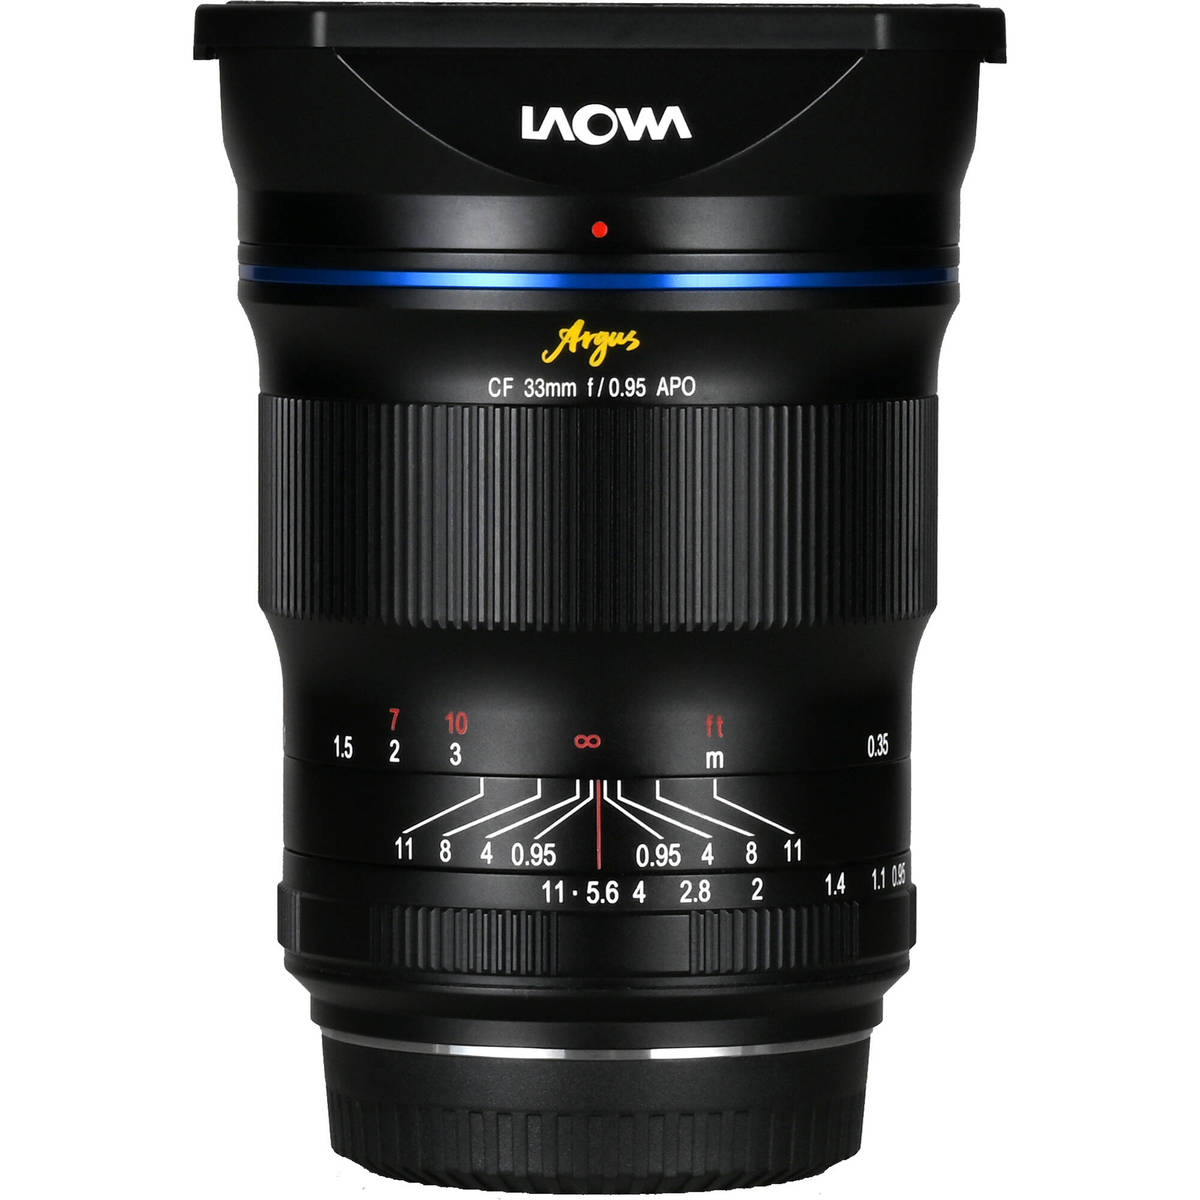 Main Image Laowa Lens 33mm f/0.95 CF APO Argus (Sony E)